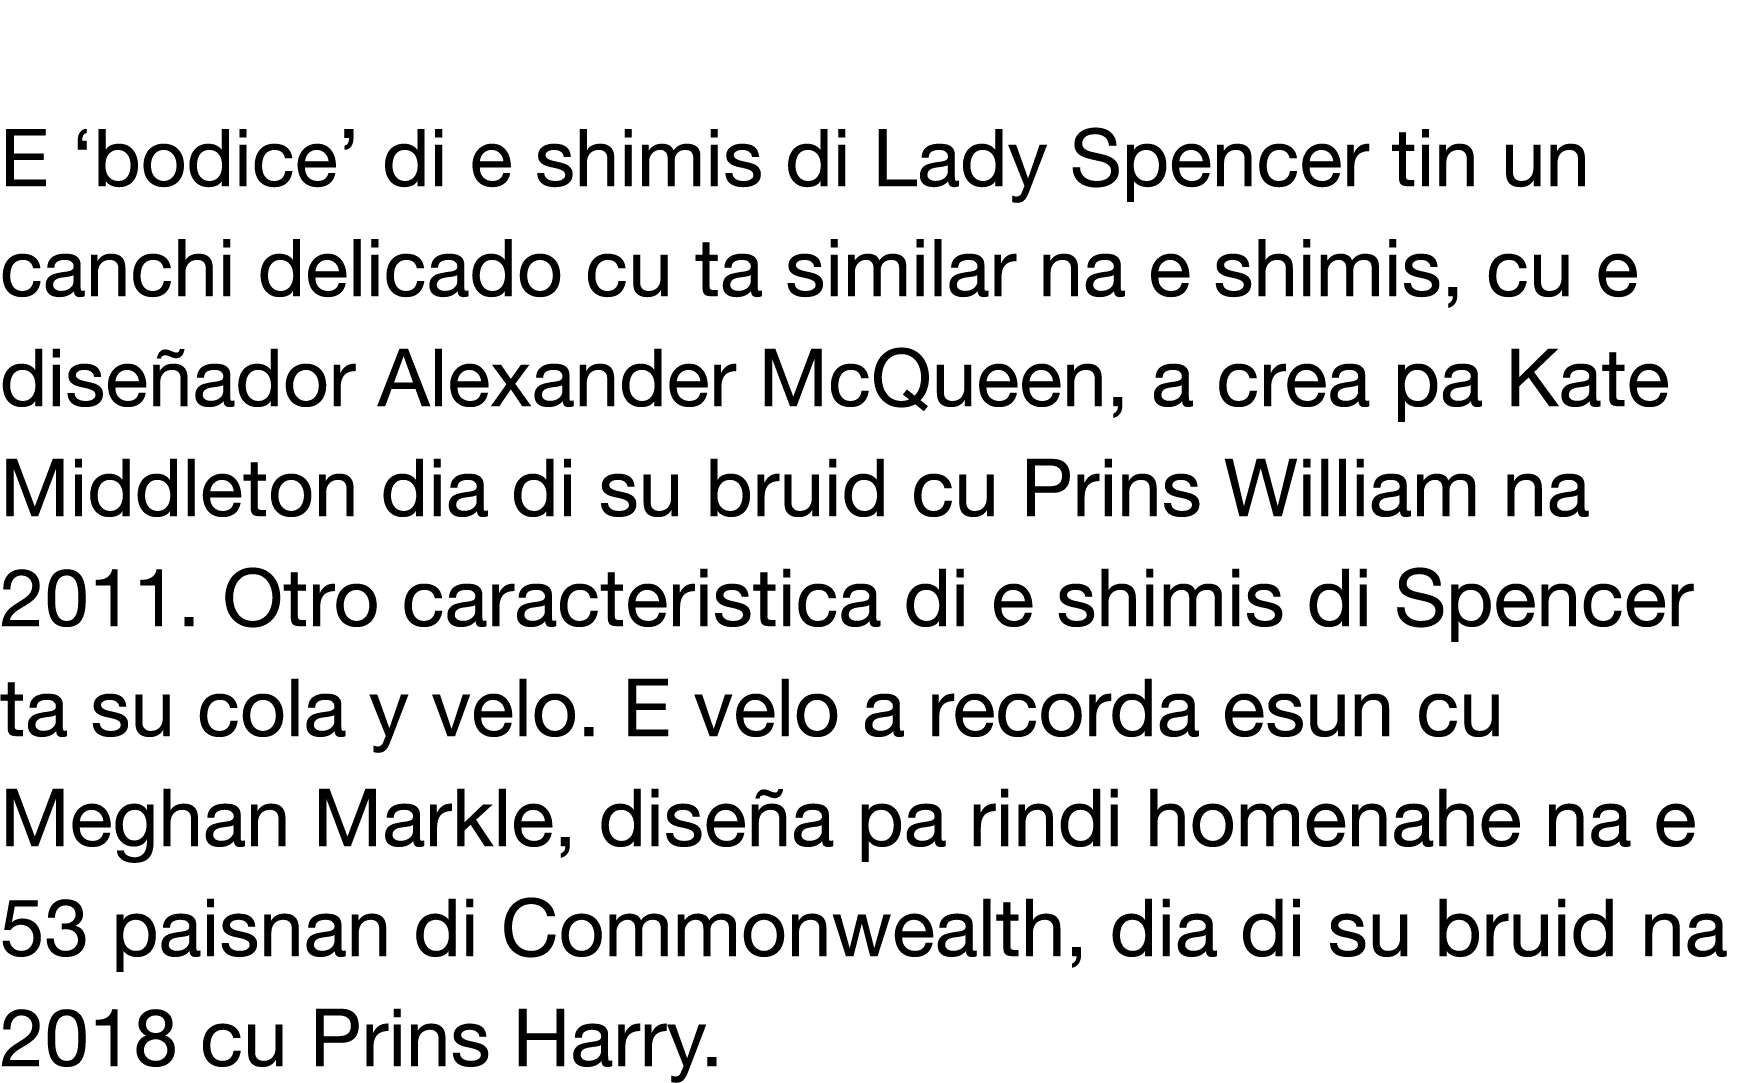  E  bodice  di e shimis di Lady Spencer tin un canchi delicado cu ta similar na e shimis, cu e dise ador Alexander Mc   